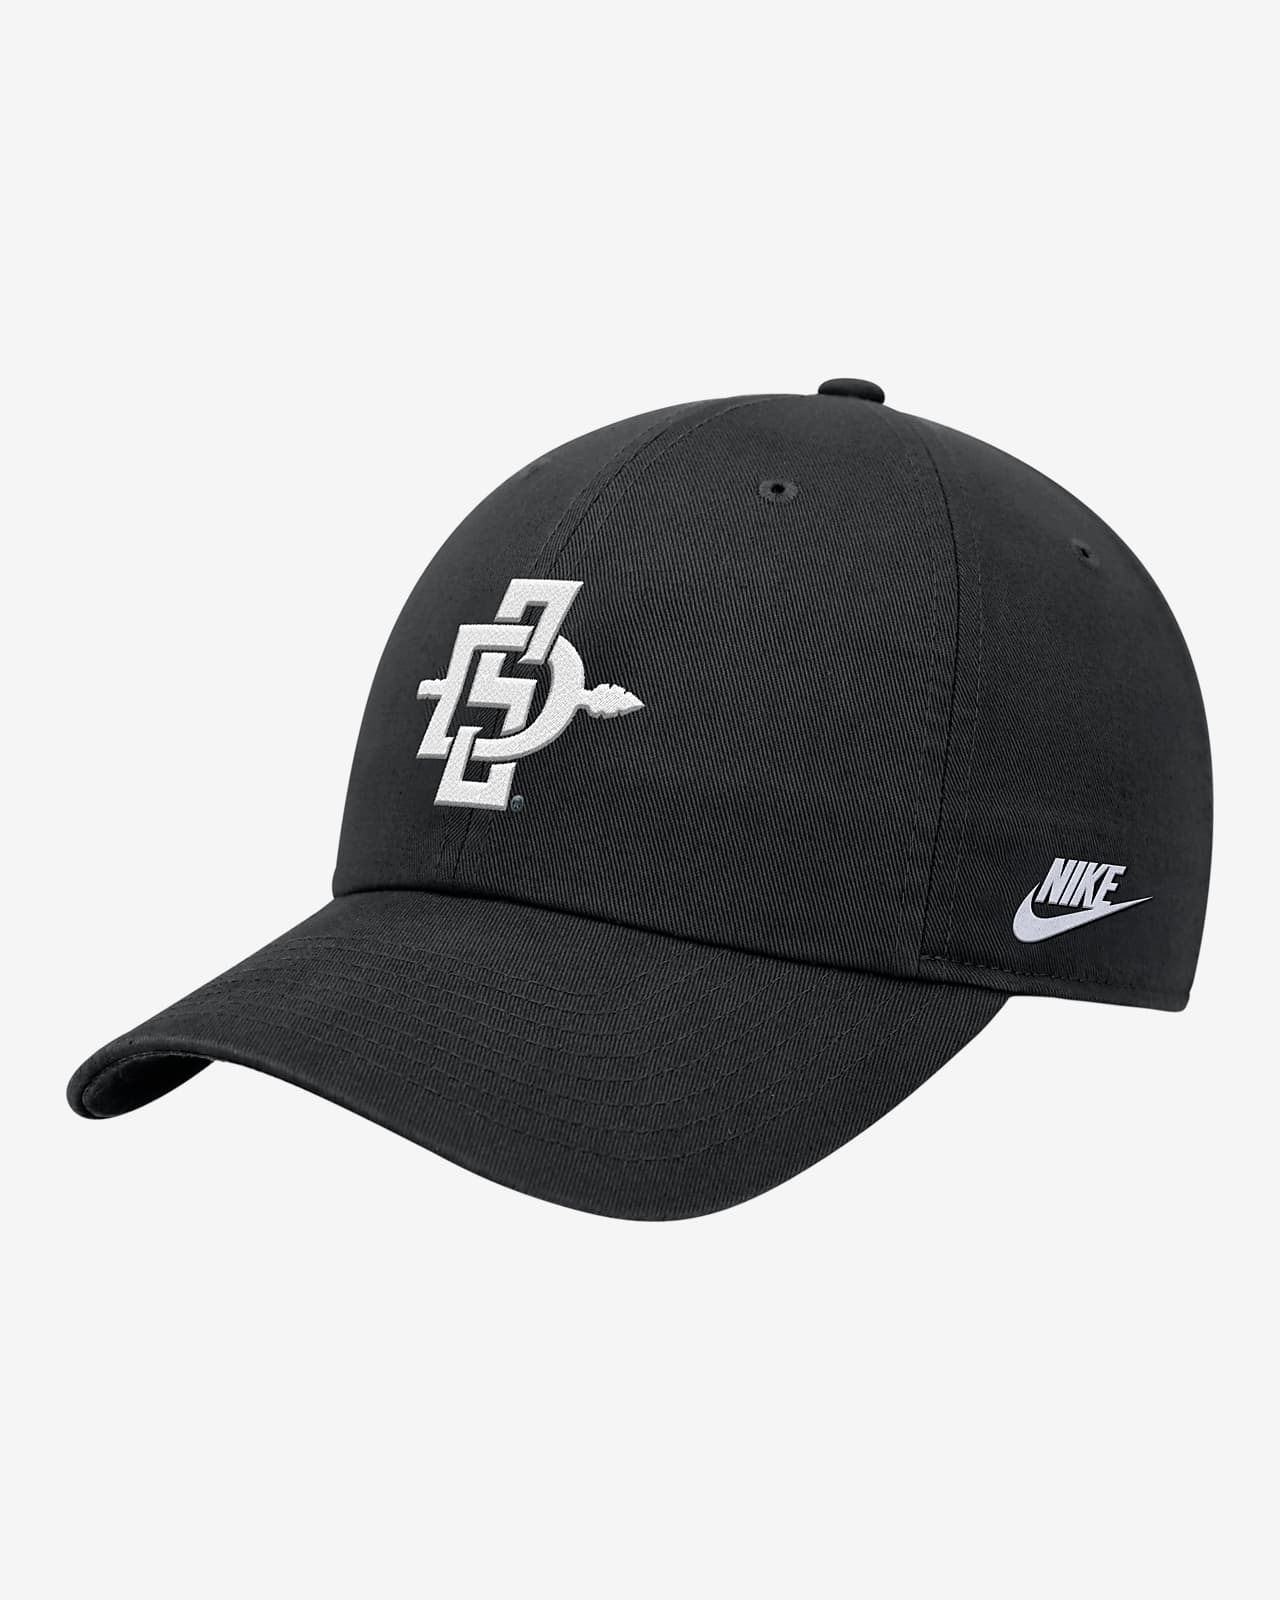 San Diego State Nike College Cap